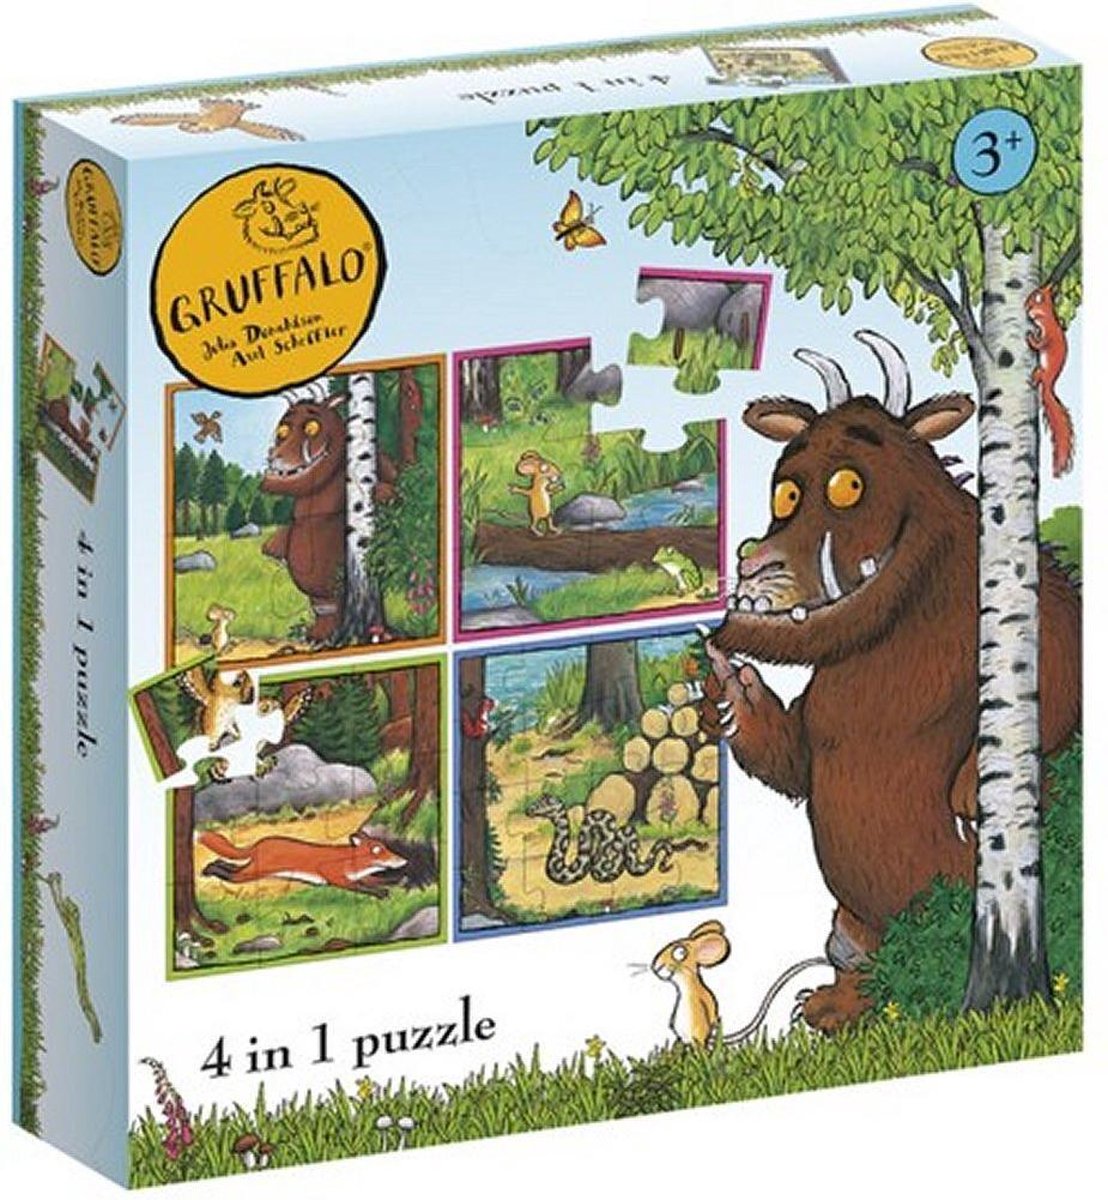 Gruffalo puzzel 4 in 1 puzzel educatief peuter speelgoed - kinderpuzzel 4x6x9x16 stukjes leren puzzelen - 3 jaar en ouder - Bambolino Toys - Bambolino